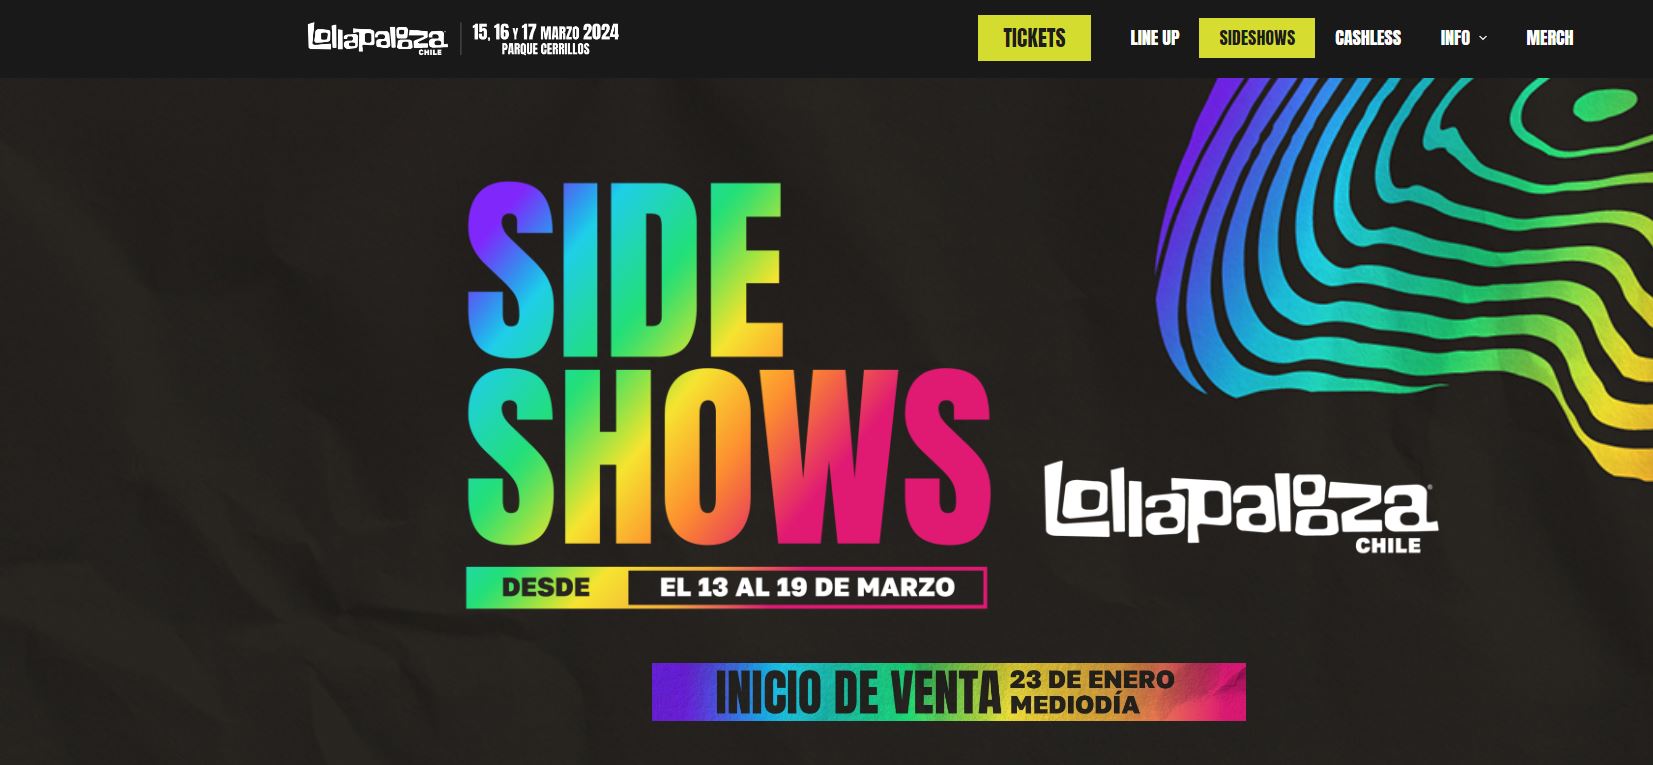 Página oficial de Lollapalooza para comprar entradas a los sideshowshttps:/www.lollapaloozacl.com/sideshows//